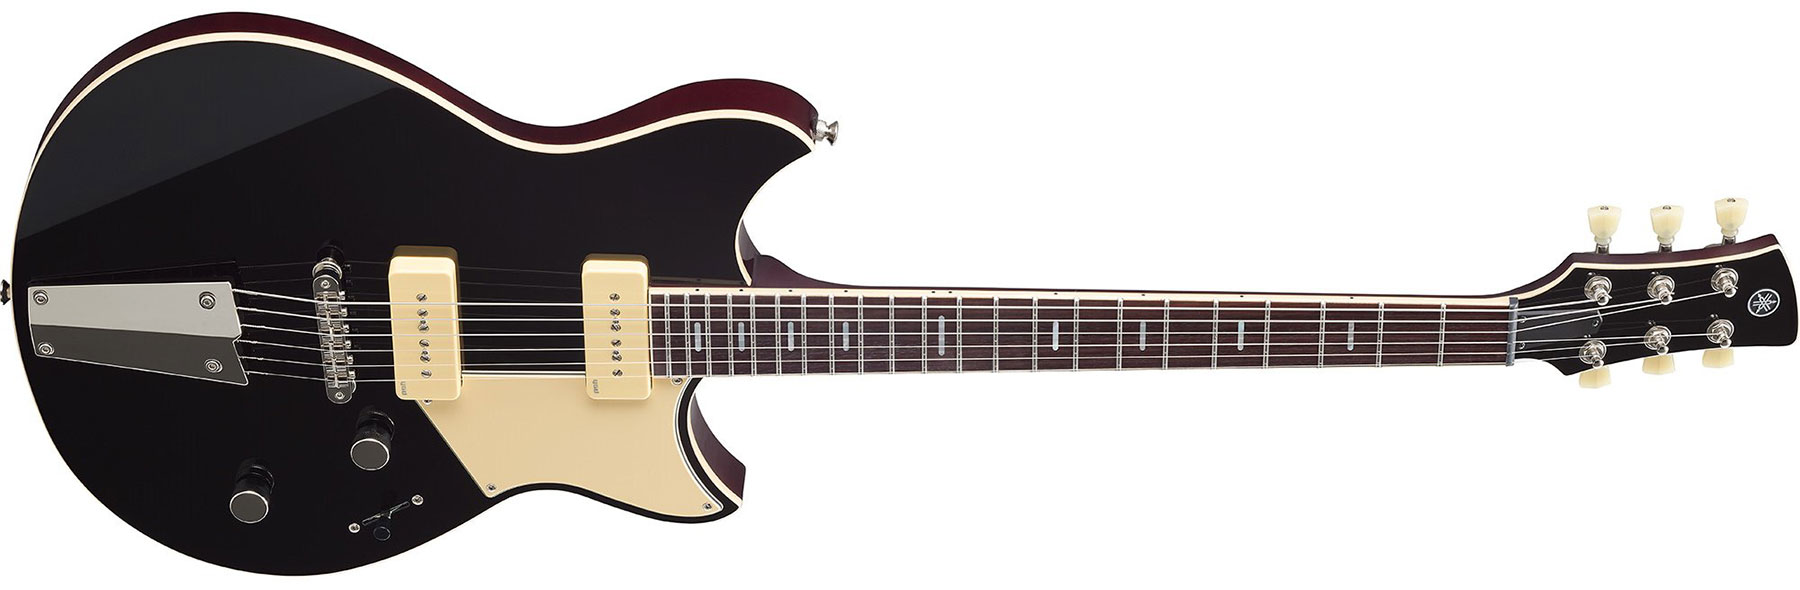 Yamaha Revstar Standard RSS02T - black Double cut electric guitar